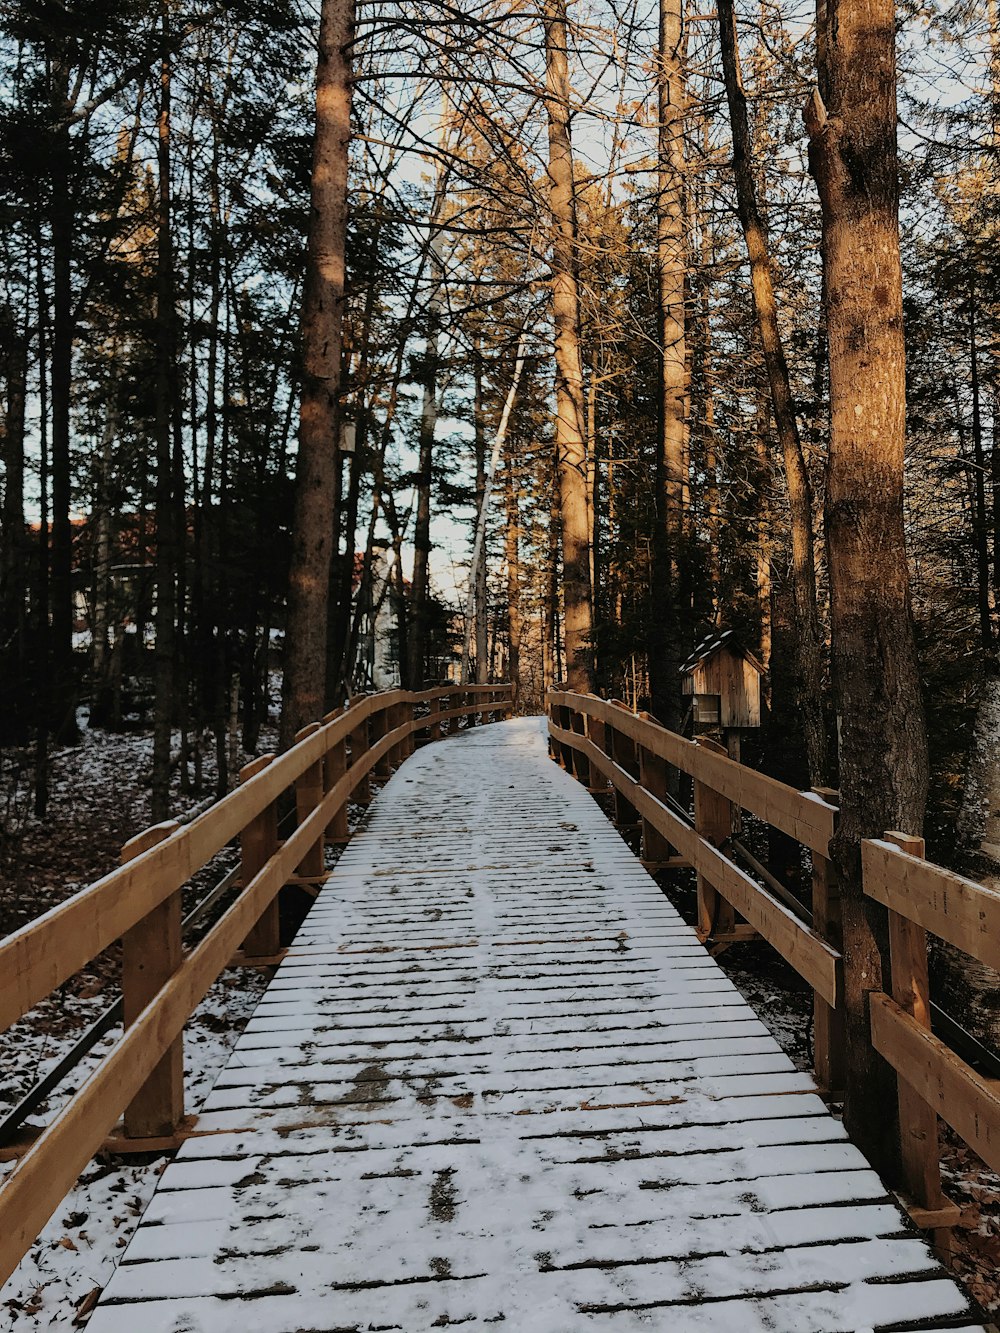 snow covered brown wooden bridge between trees